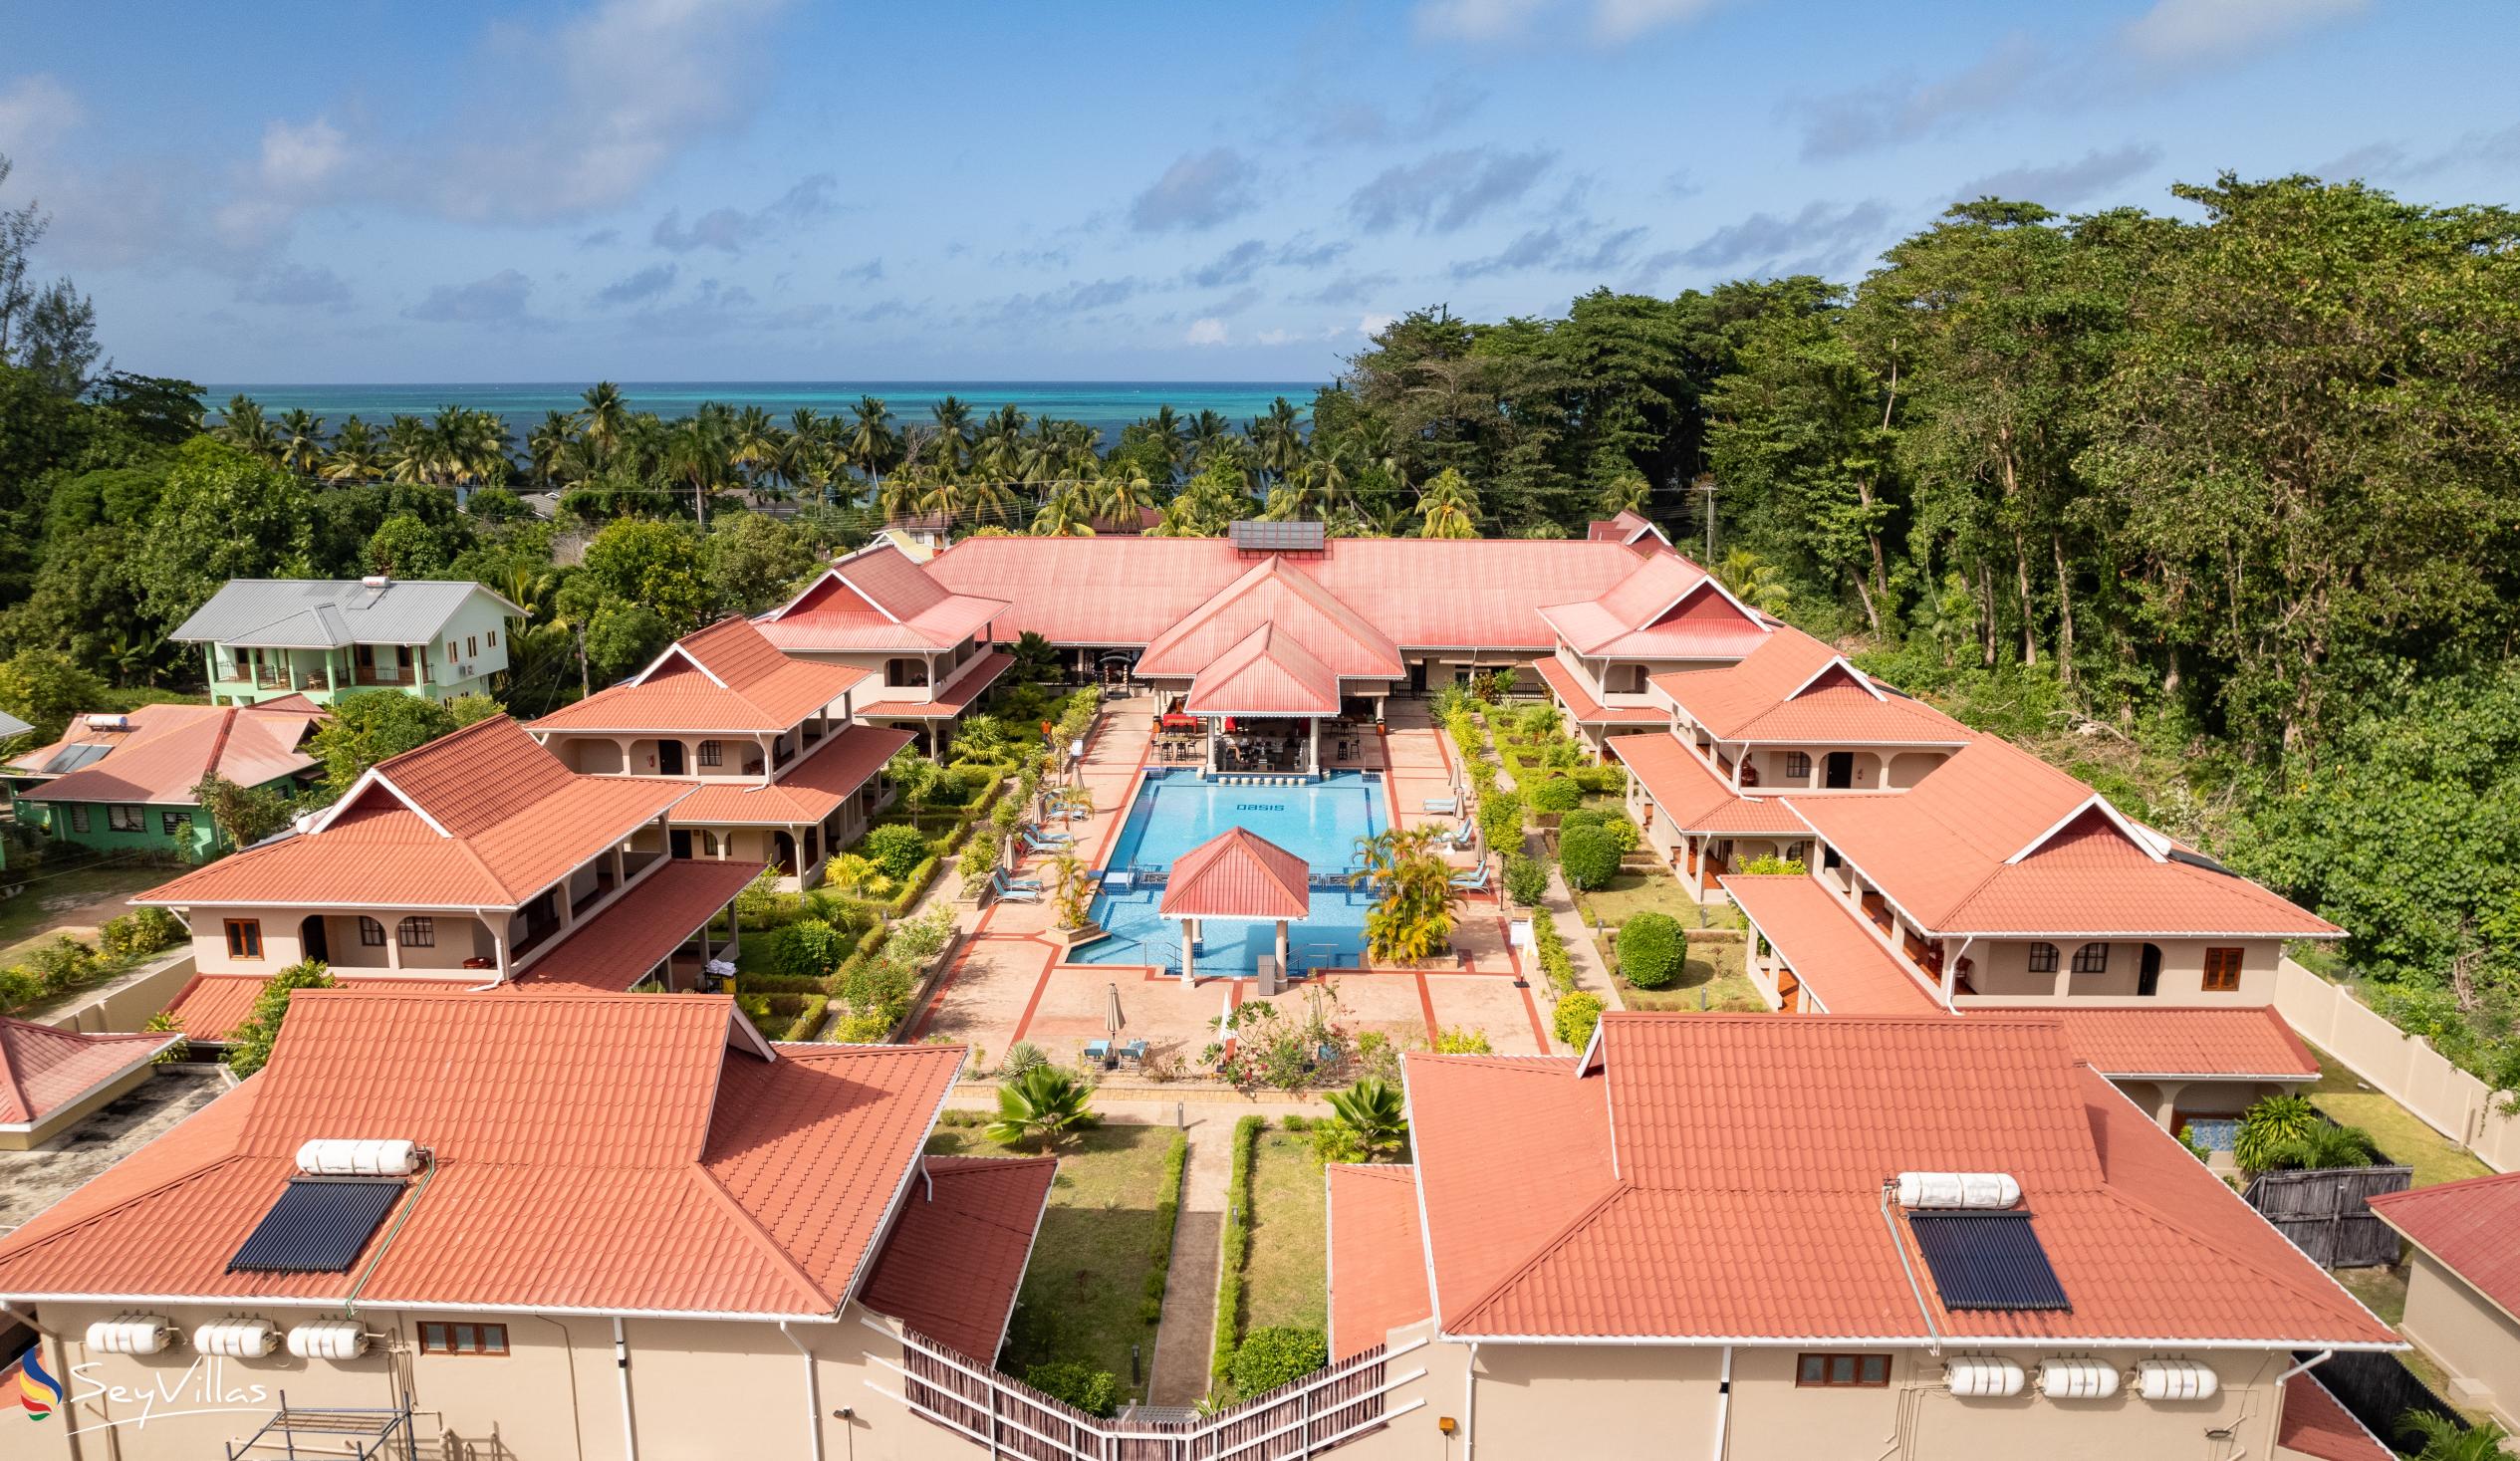 Photo 6: Oasis Hotel, Restaurant & Spa - Outdoor area - Praslin (Seychelles)